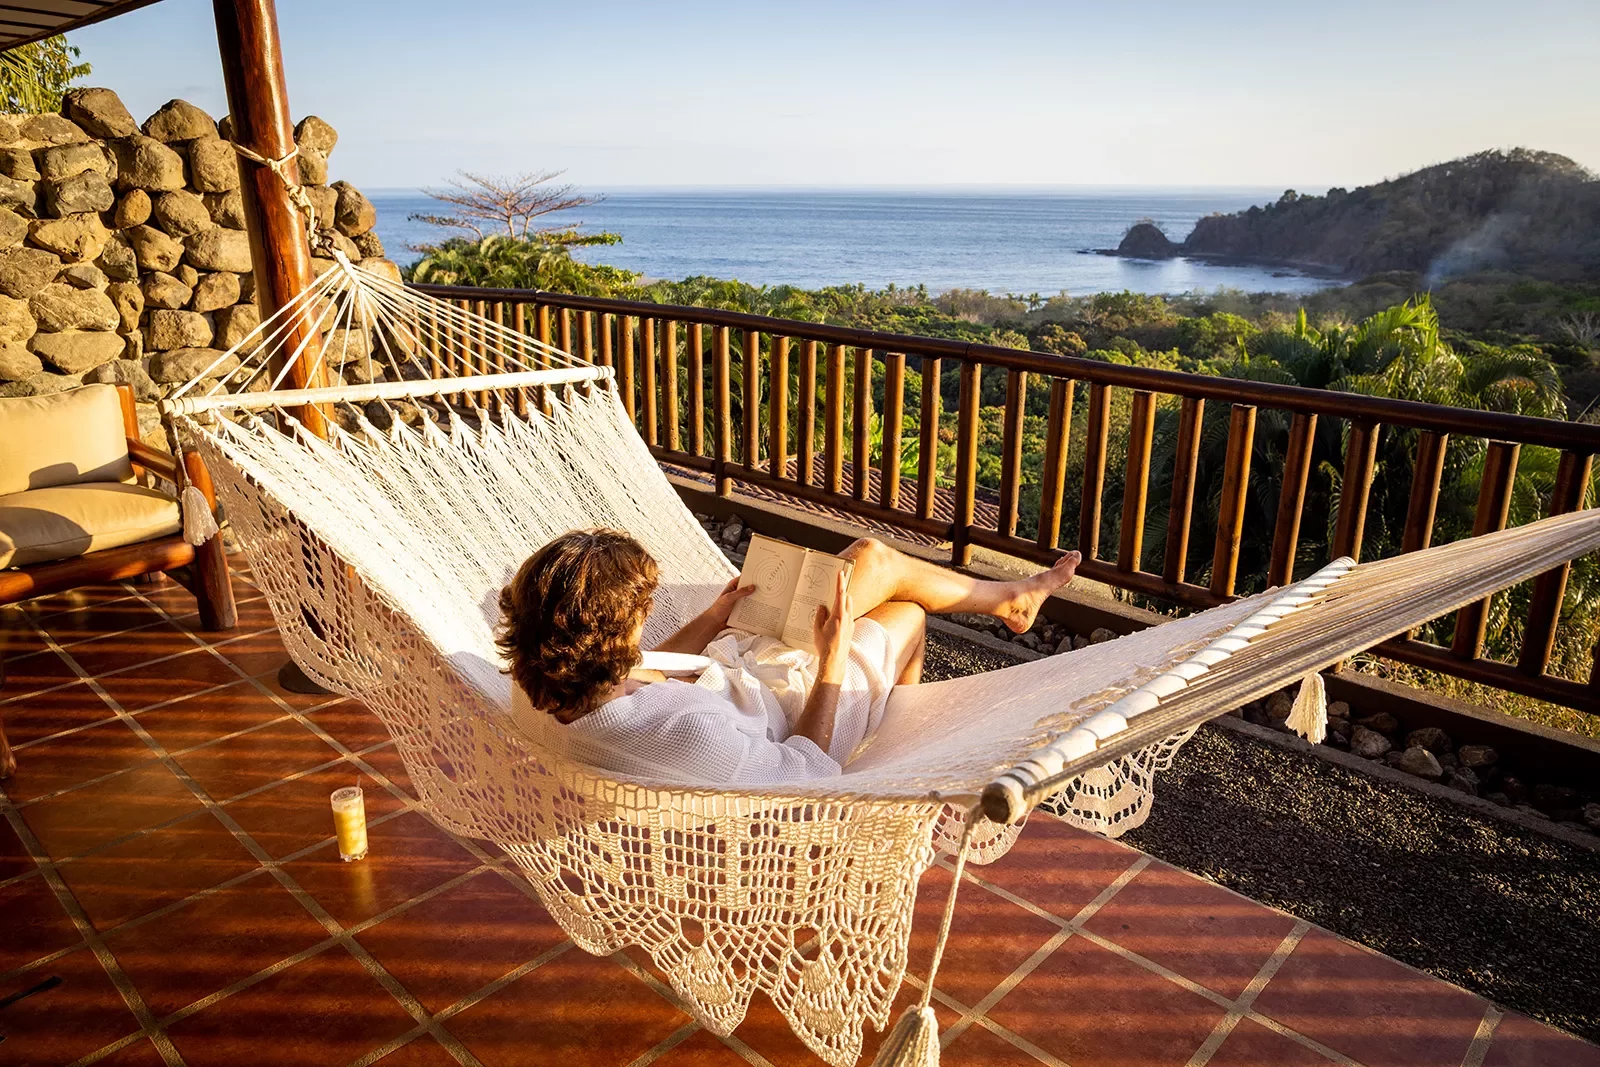 Guest on hotel balcony, hammock, overlooking forest, ocean.